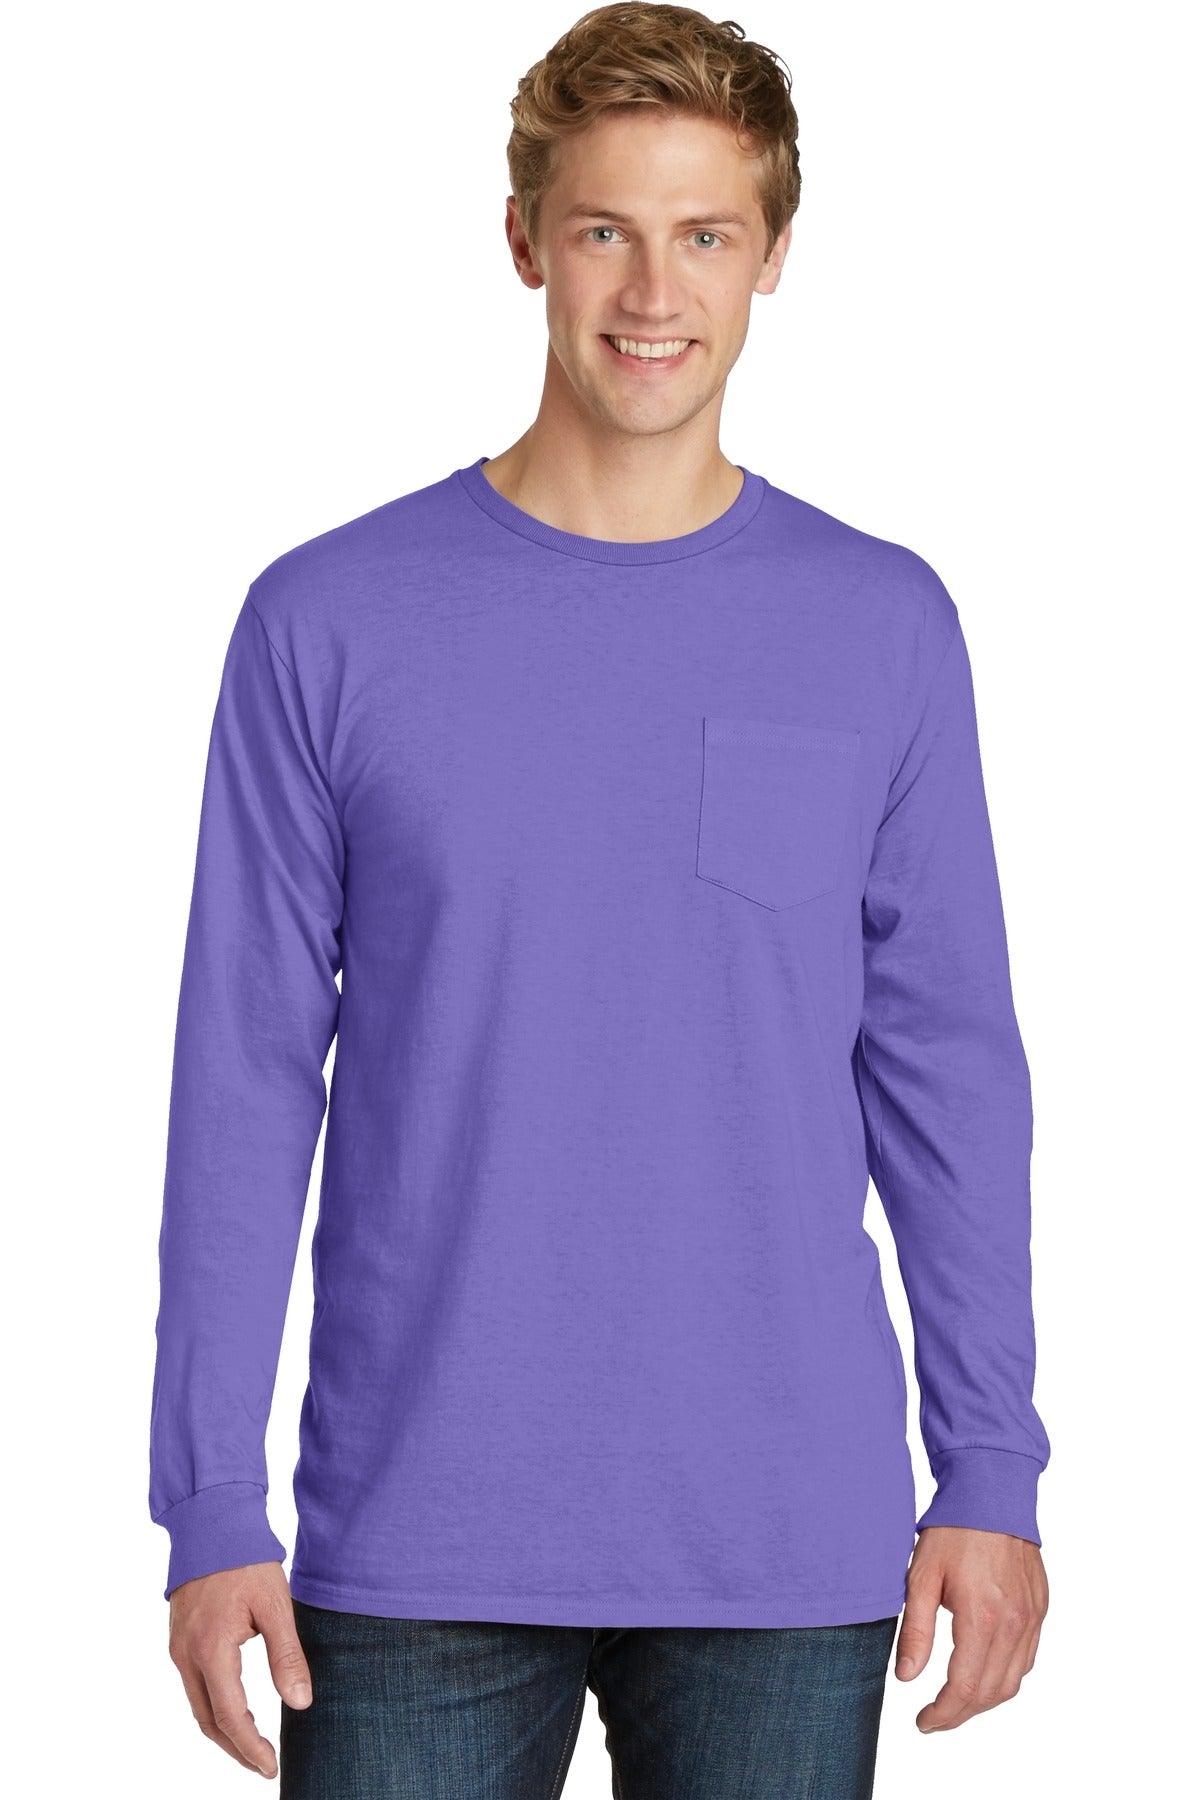 Port & Company Beach Wash Garment-Dyed Long Sleeve Pocket Tee PC099LSP - Dresses Max